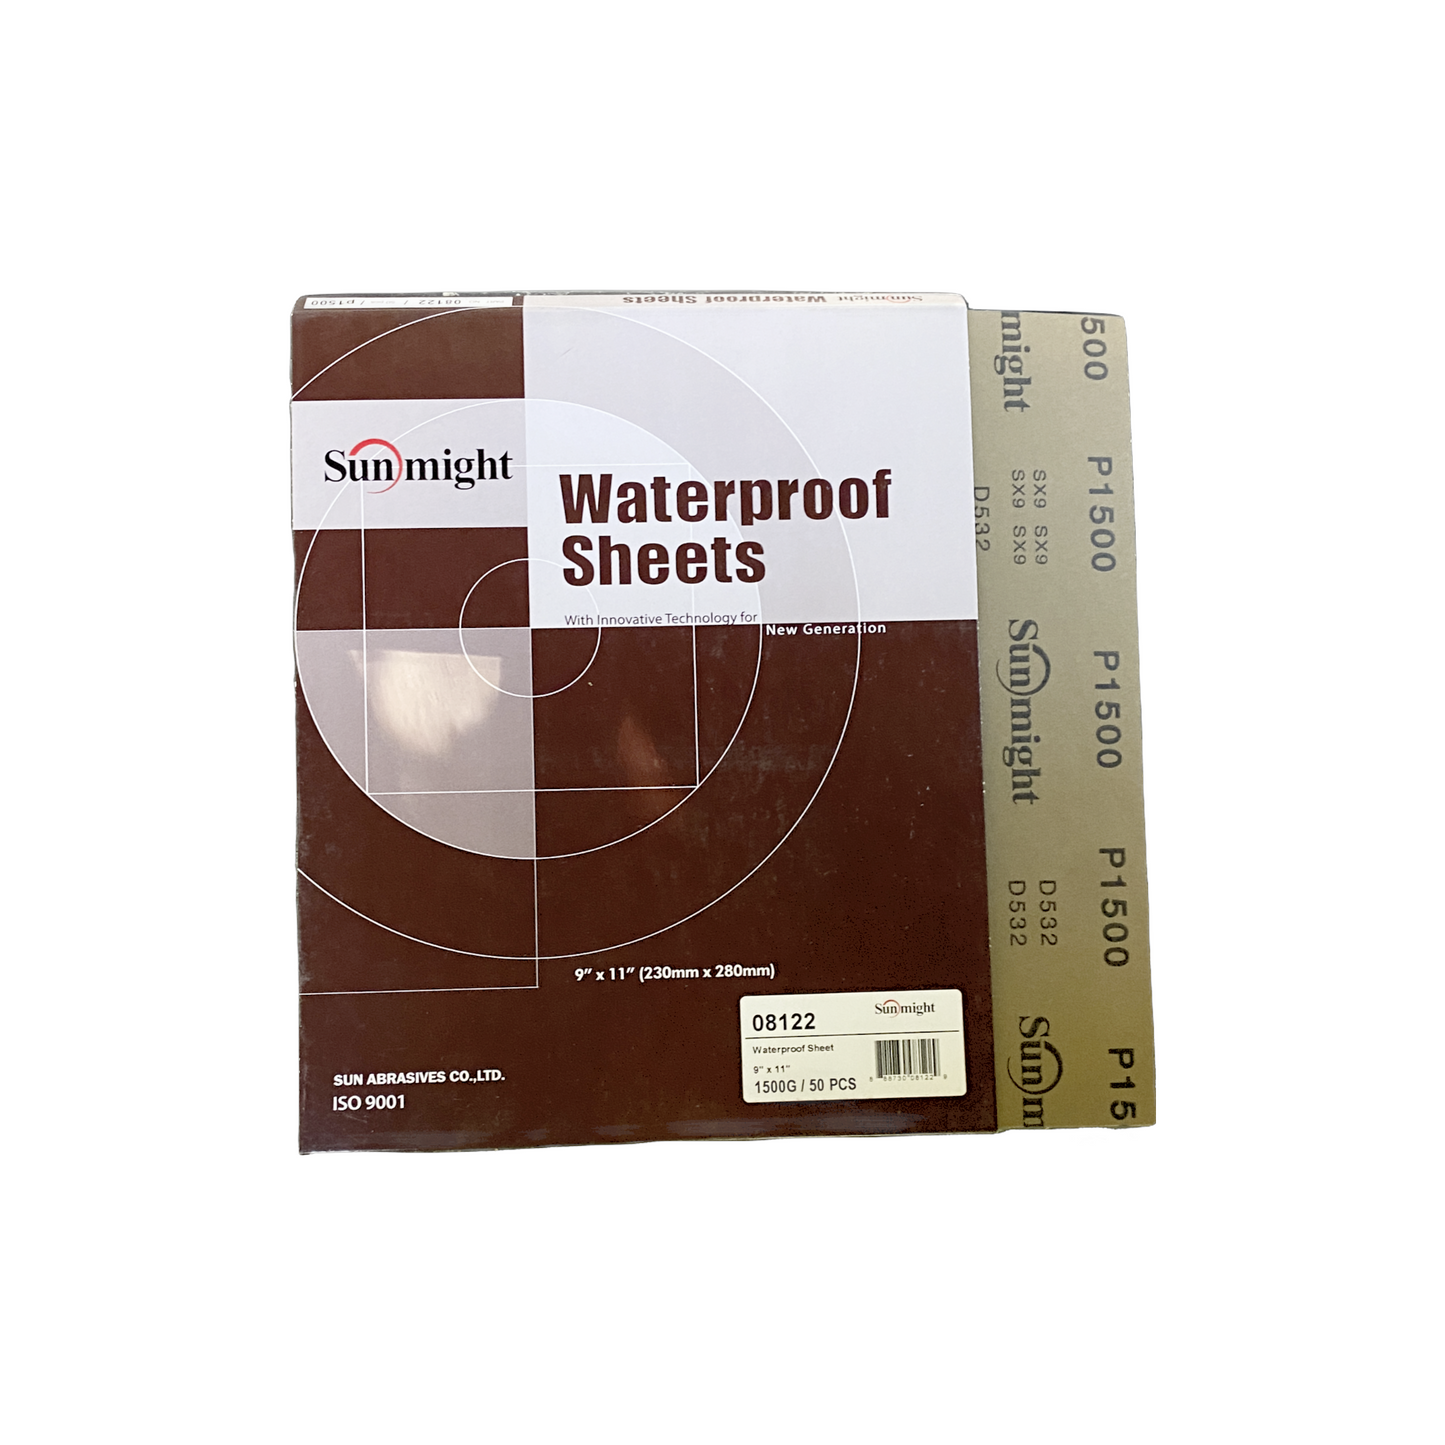 Sunmight Waterproof Sheets 9"x11", 50/box